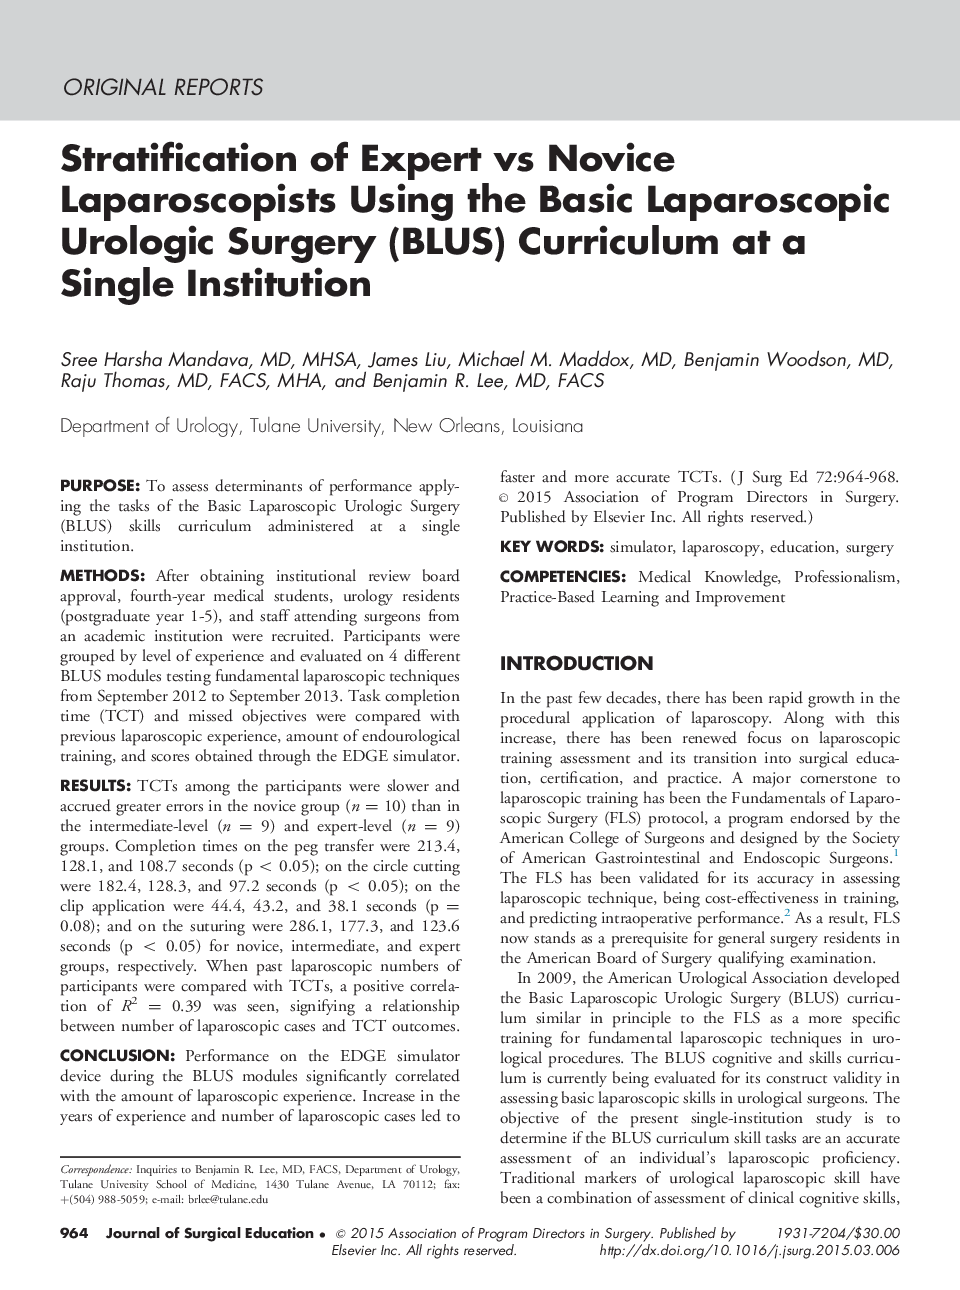 Stratification of Expert vs Novice Laparoscopists Using the Basic Laparoscopic Urologic Surgery (BLUS) Curriculum at a Single Institution